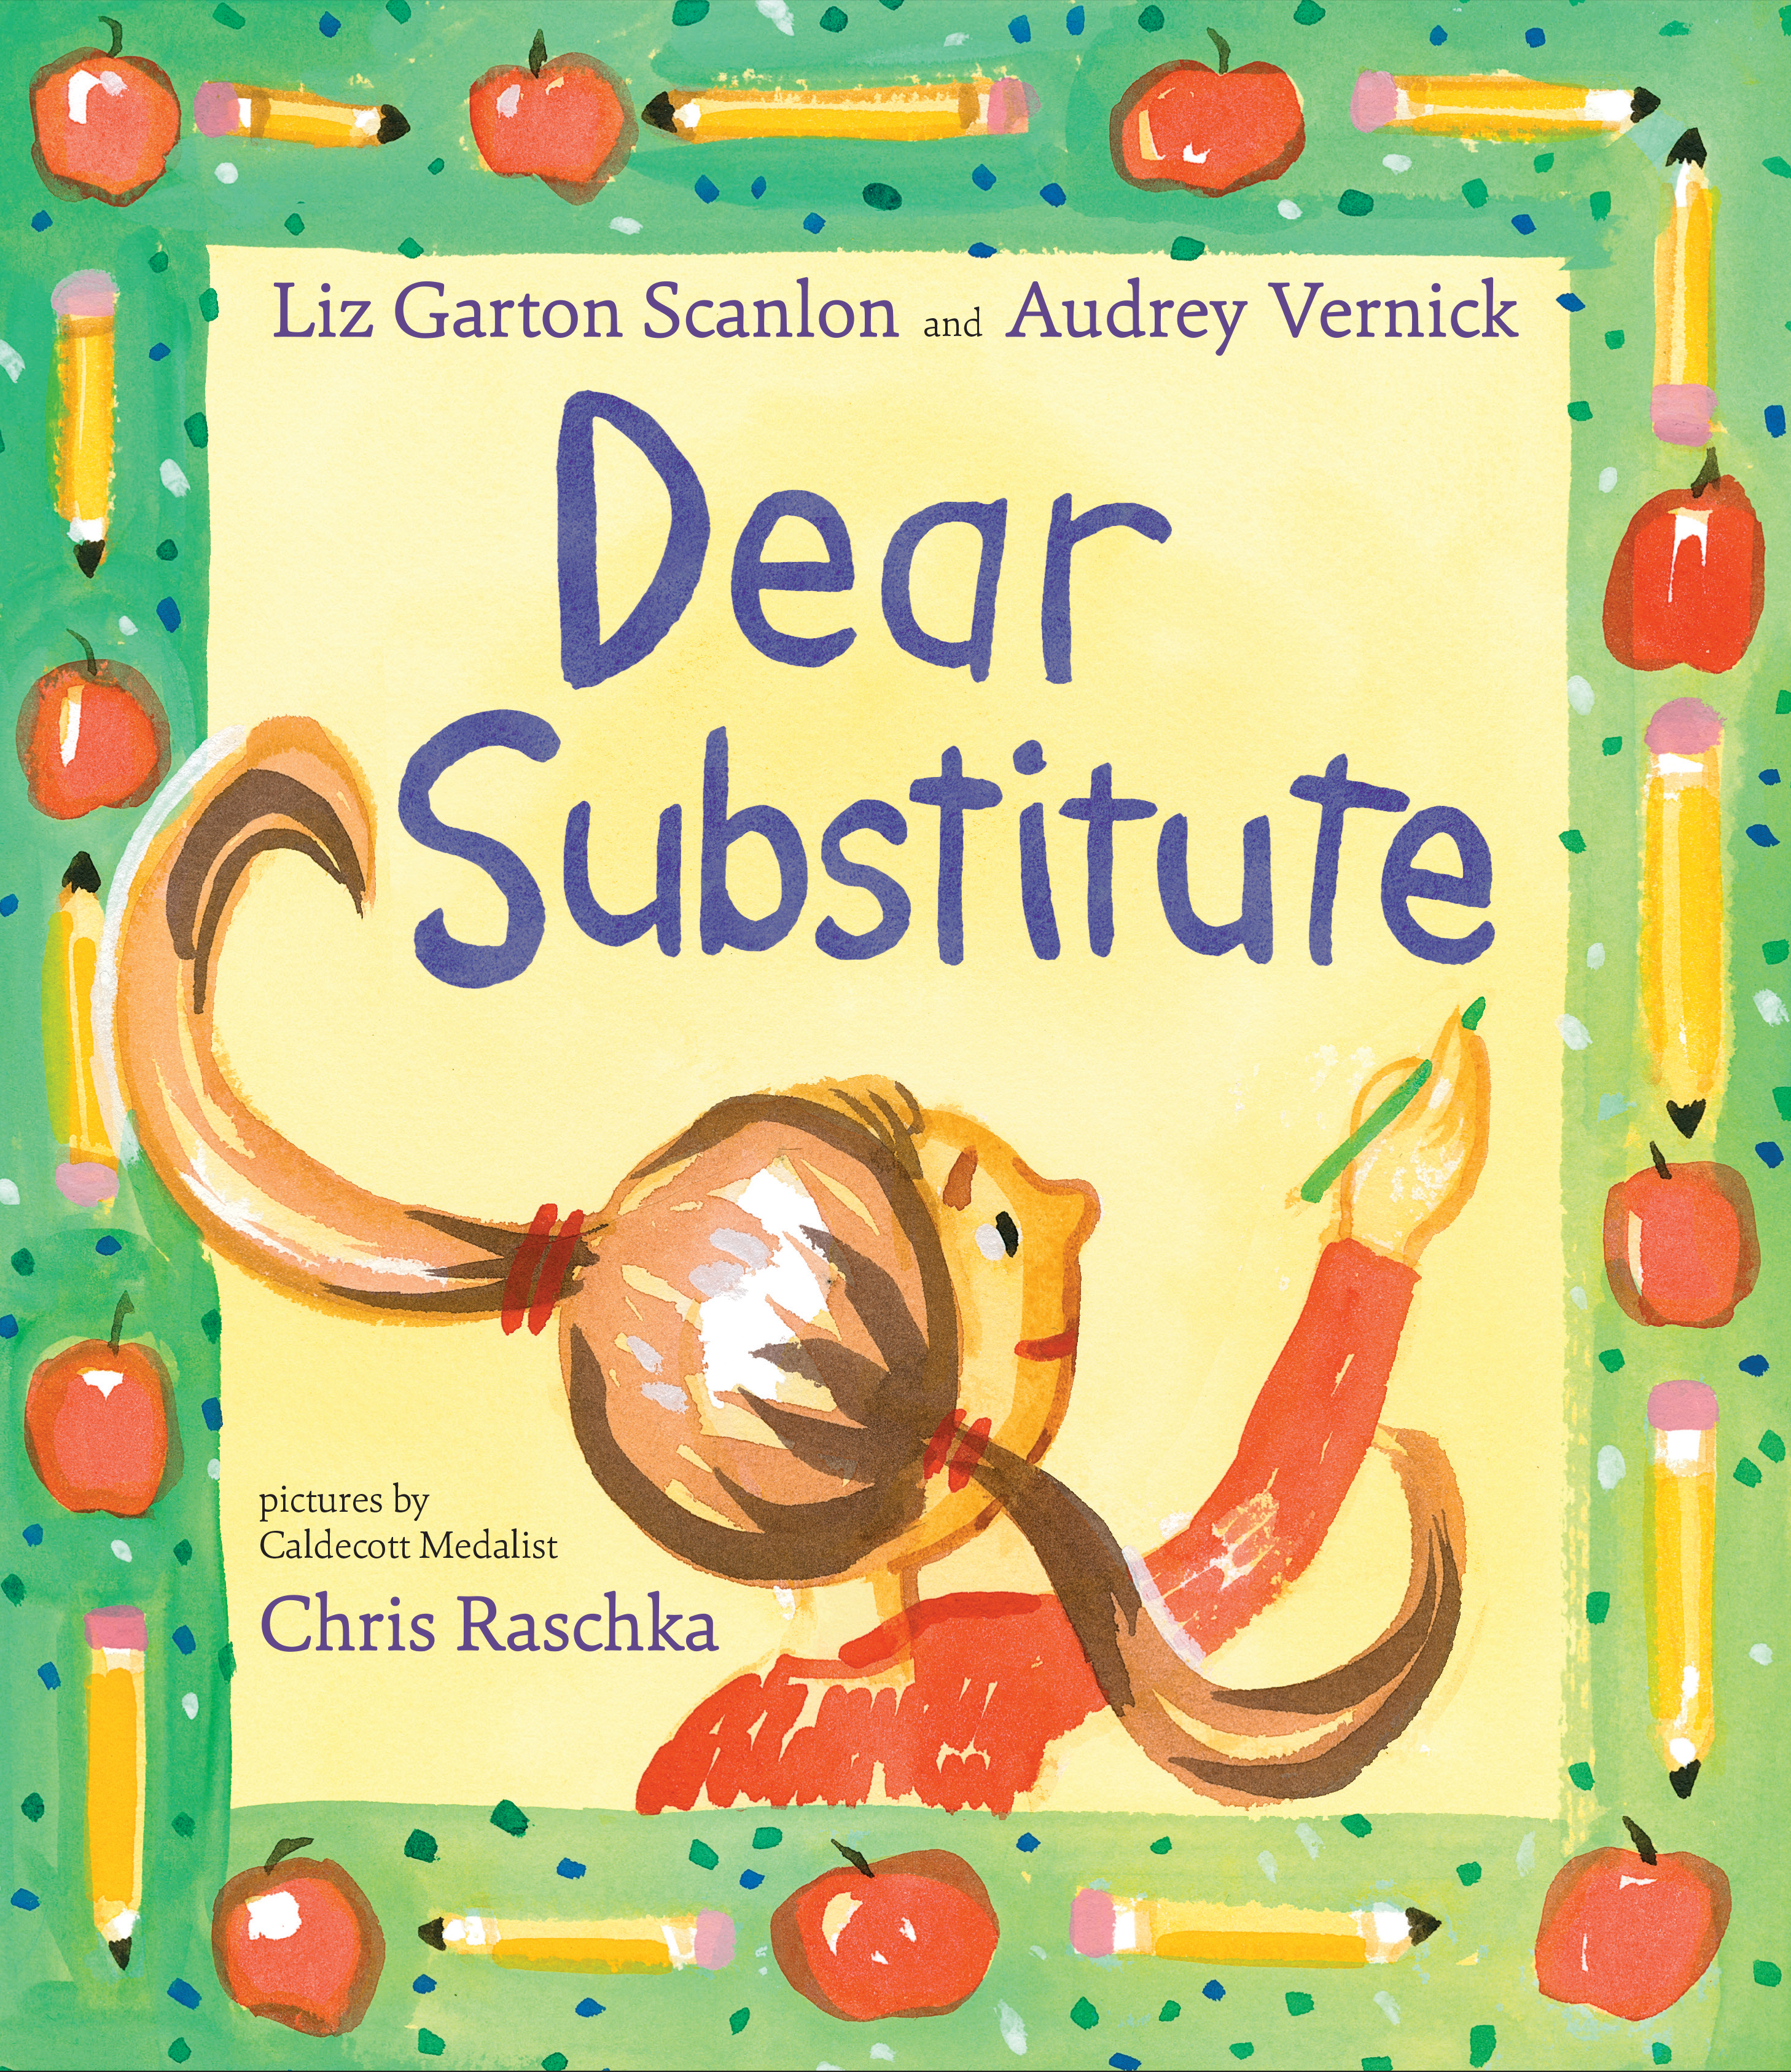 Dear Substitute cover